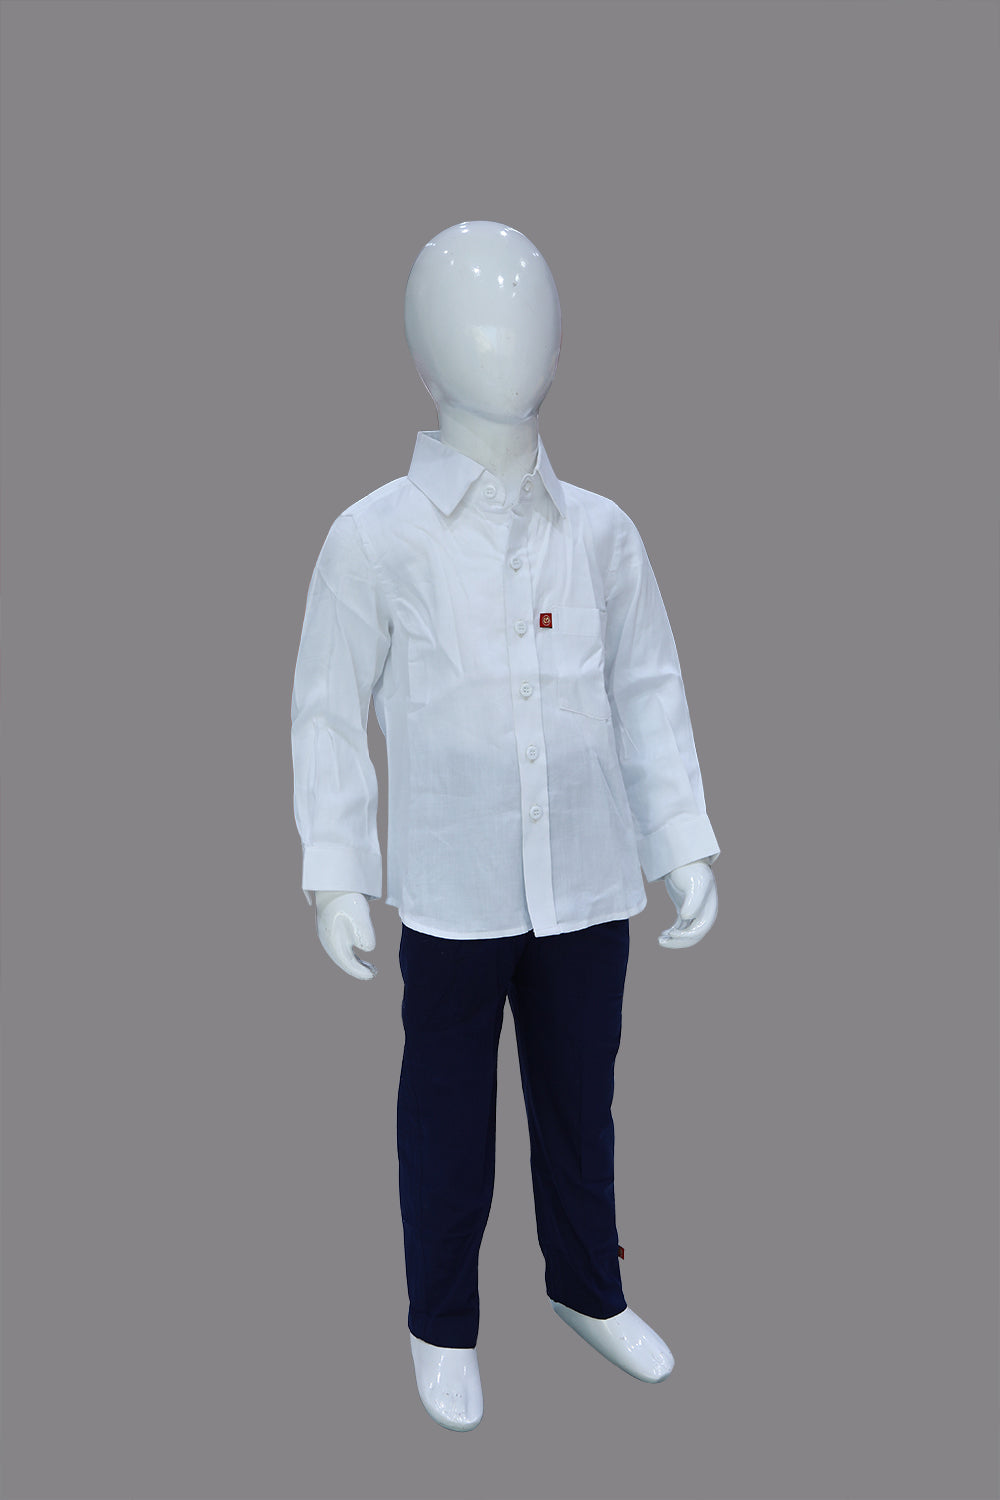 White Full Sleeves Boys Casual Shirt | S3BWHITE SHIRT